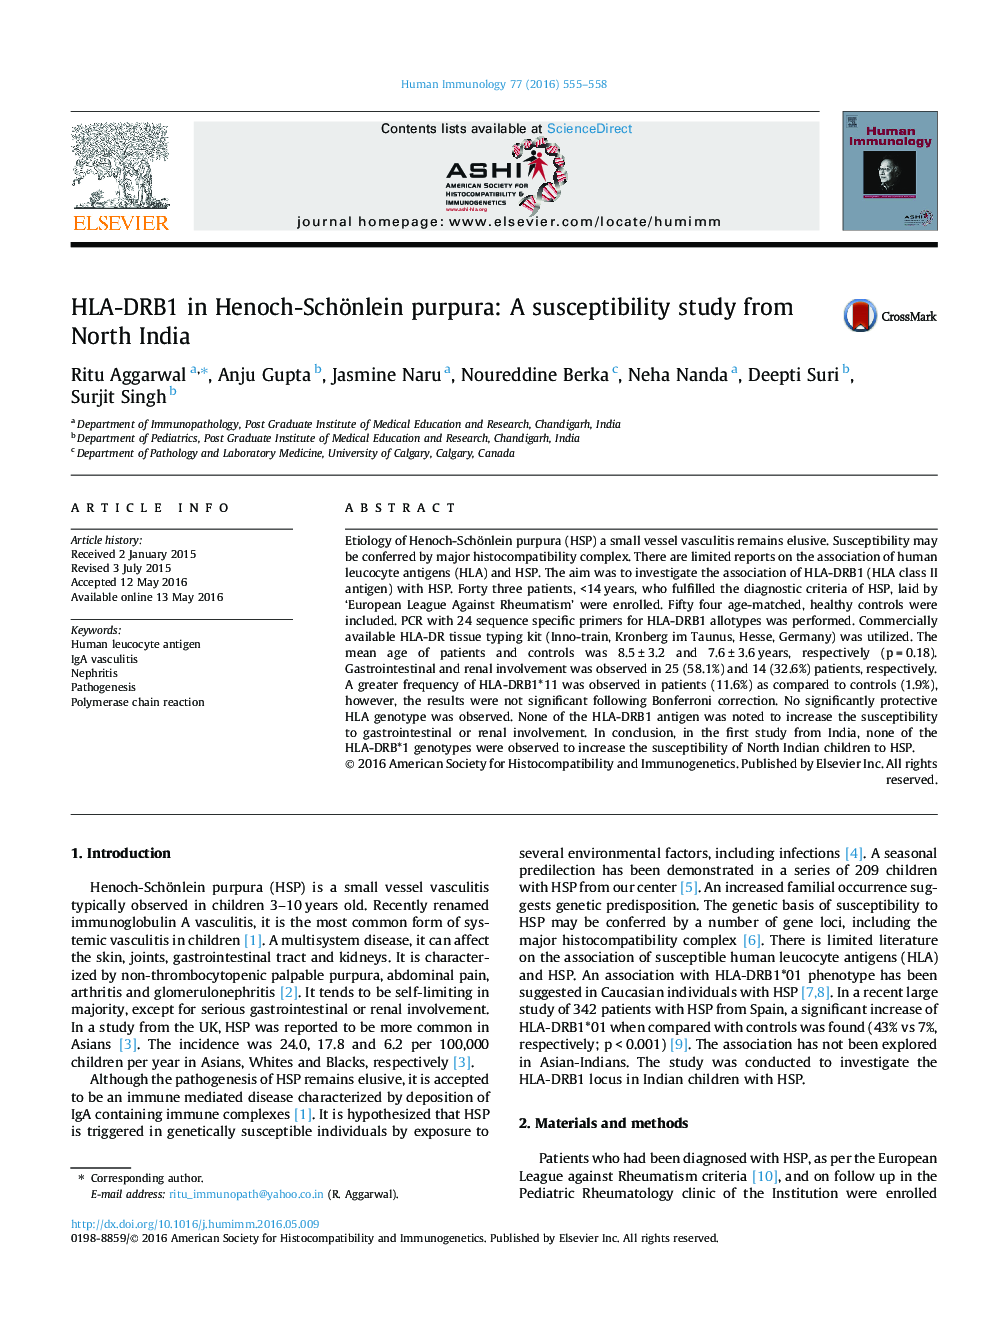 HLA-DRB1 in Henoch-Schönlein purpura: A susceptibility study from North India